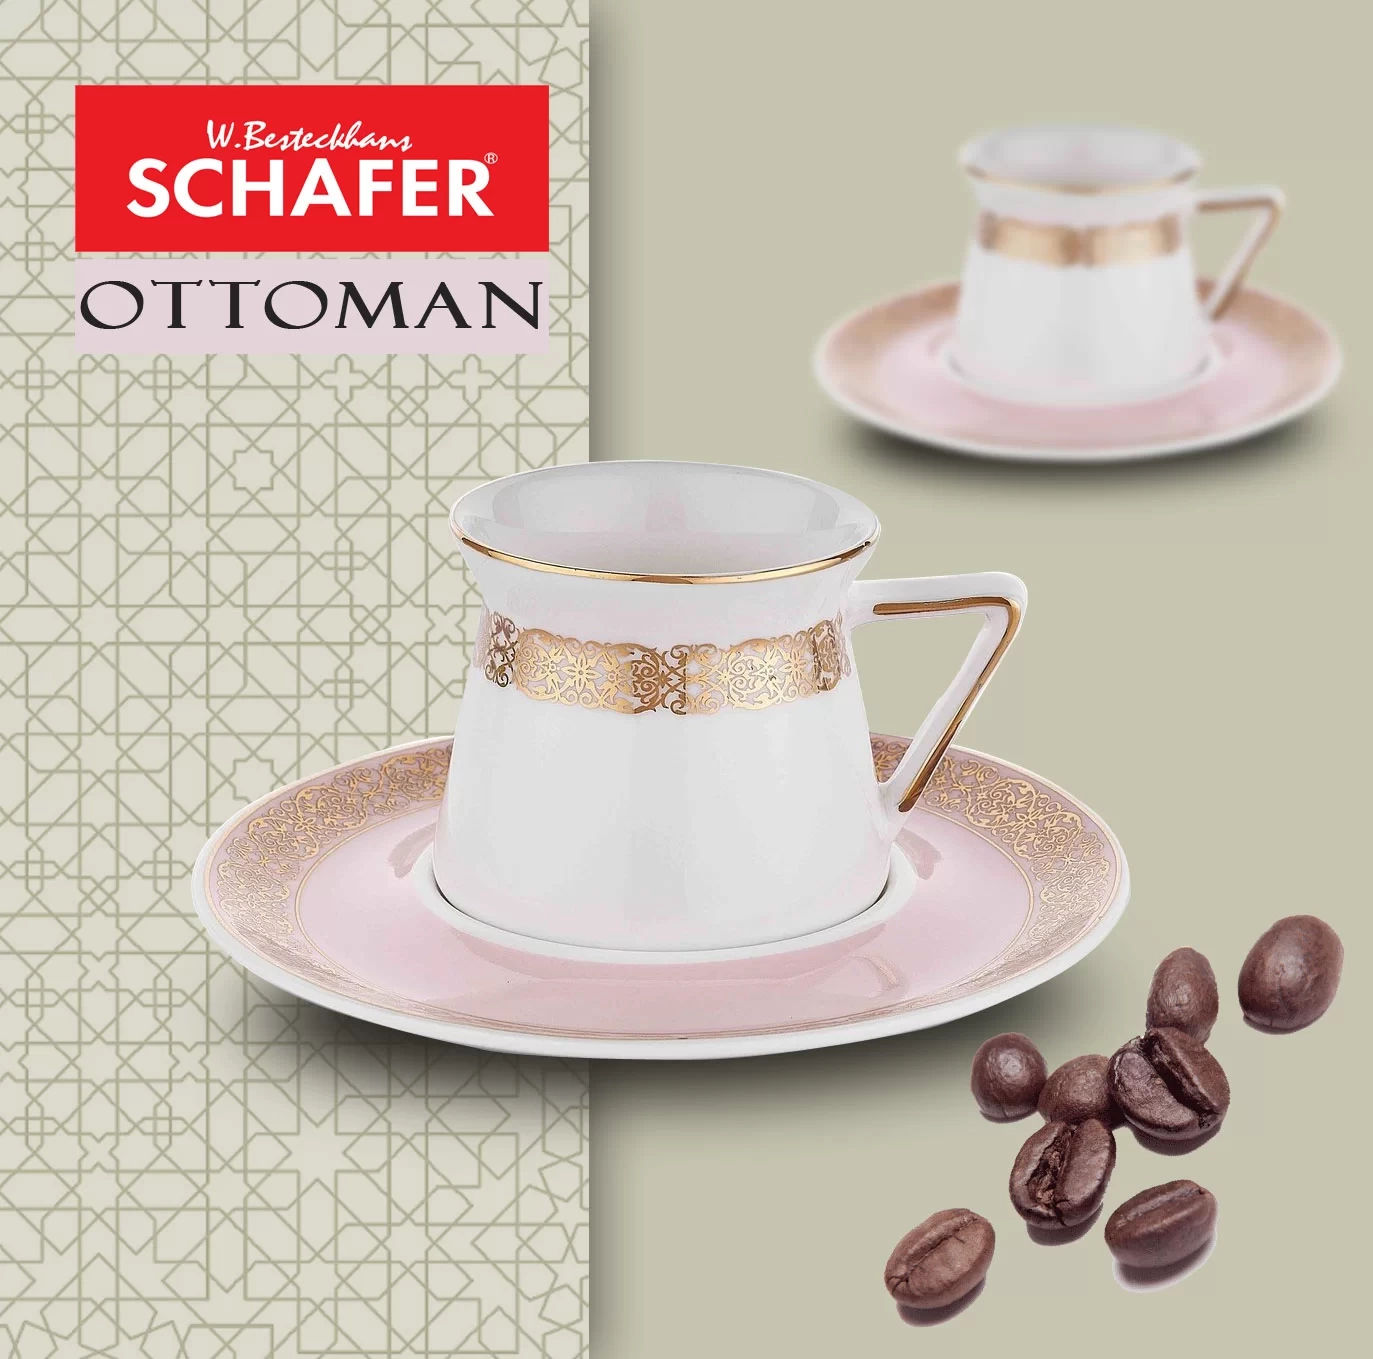 Schafer Ottoman Kahve Fincan Takımı - Pem01/90256